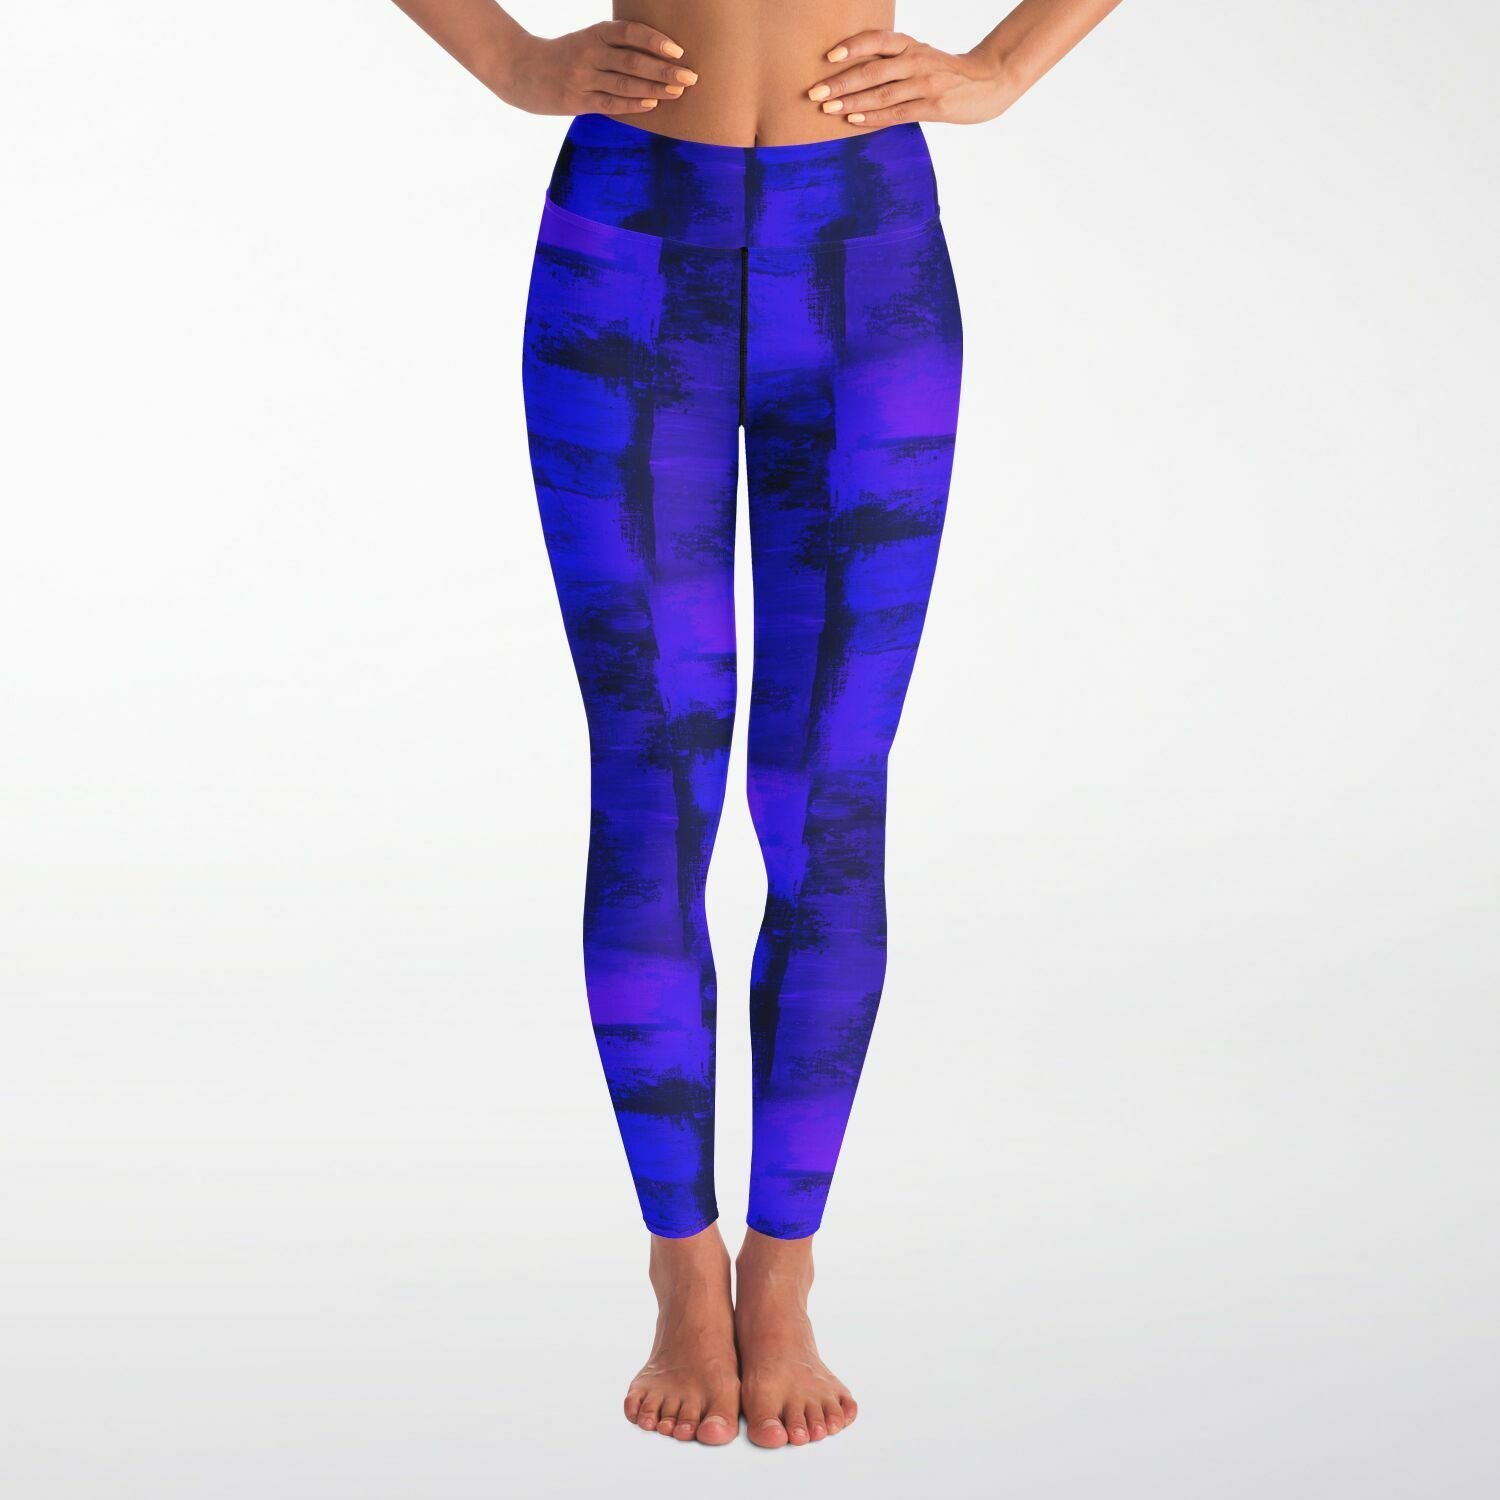 Artistic Yoga Pants (Violet Blue/ For women)